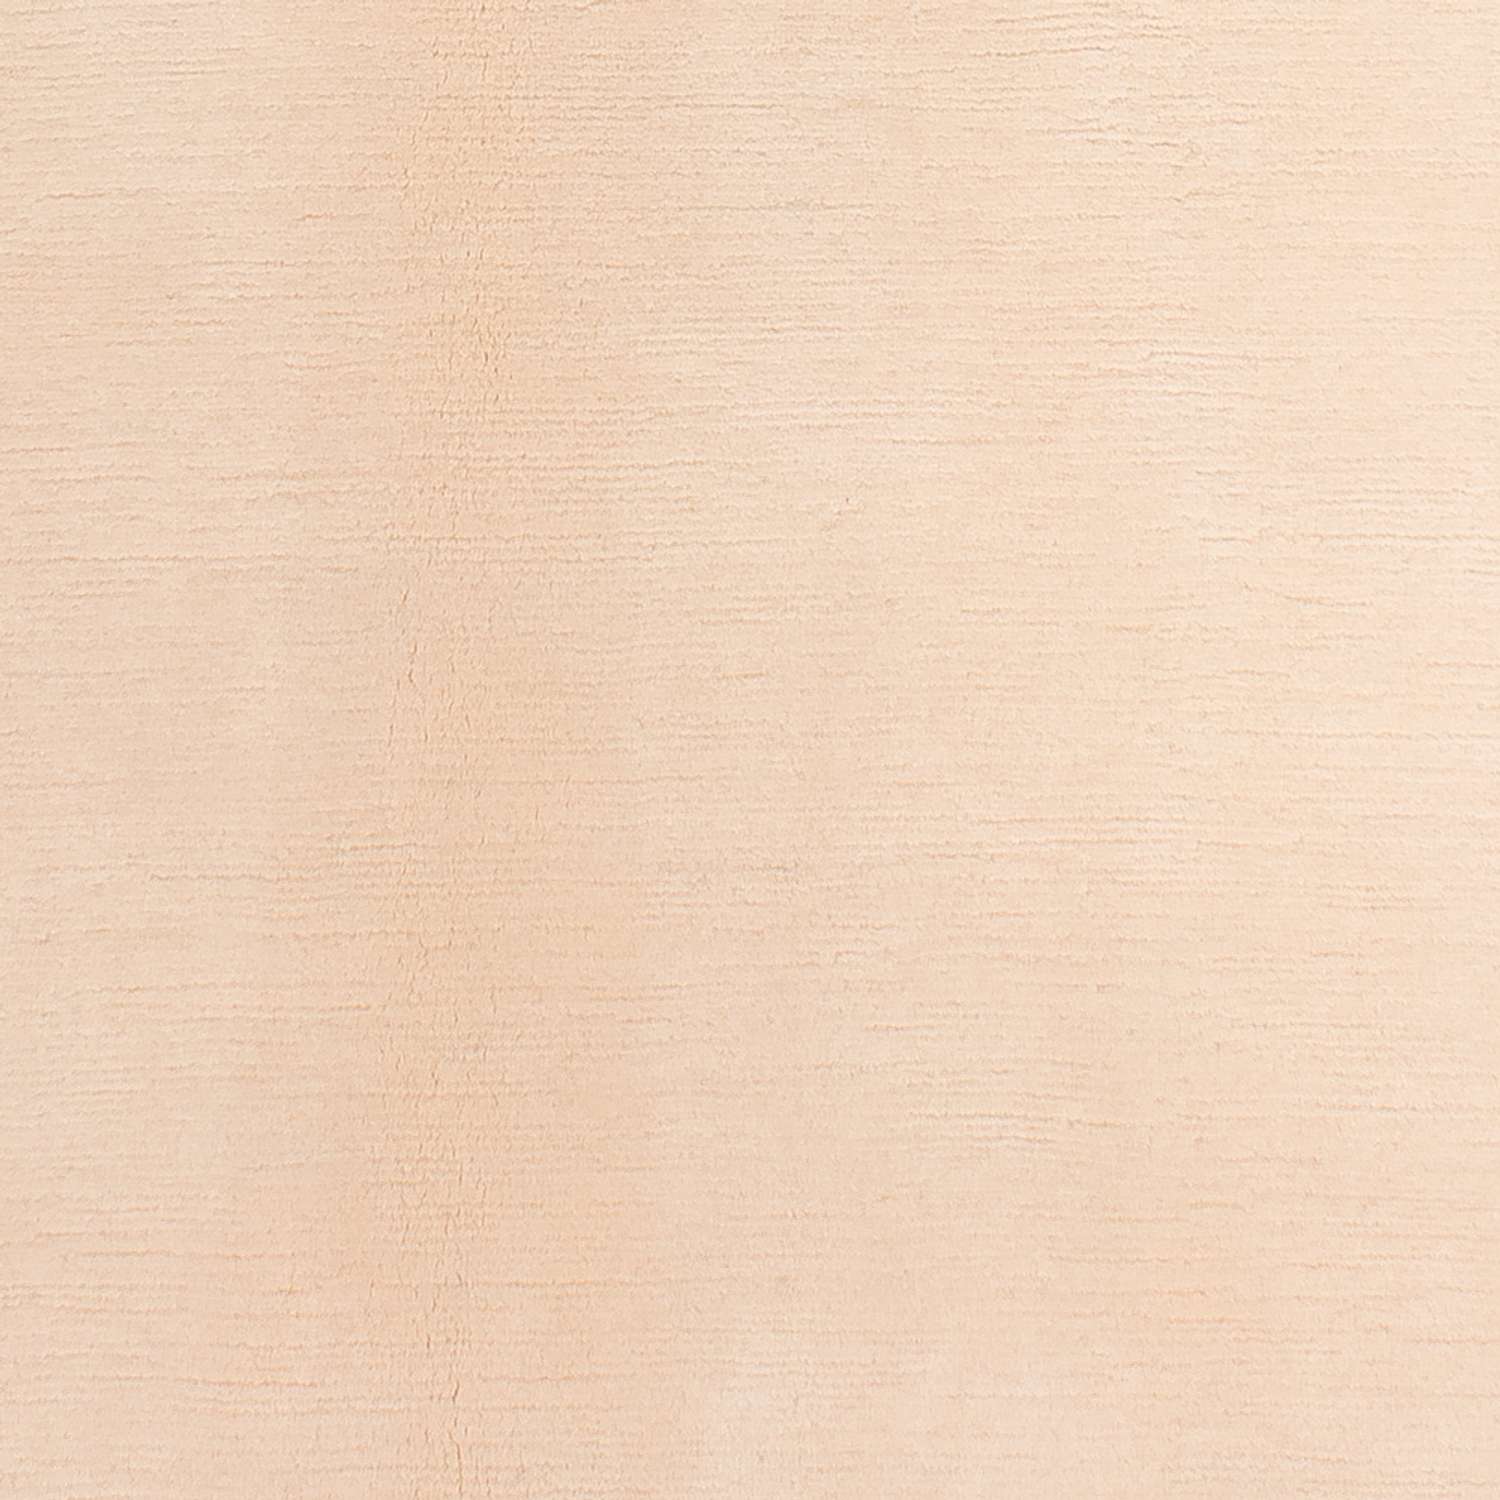 Nepal Rug - 235 x 170 cm - beige